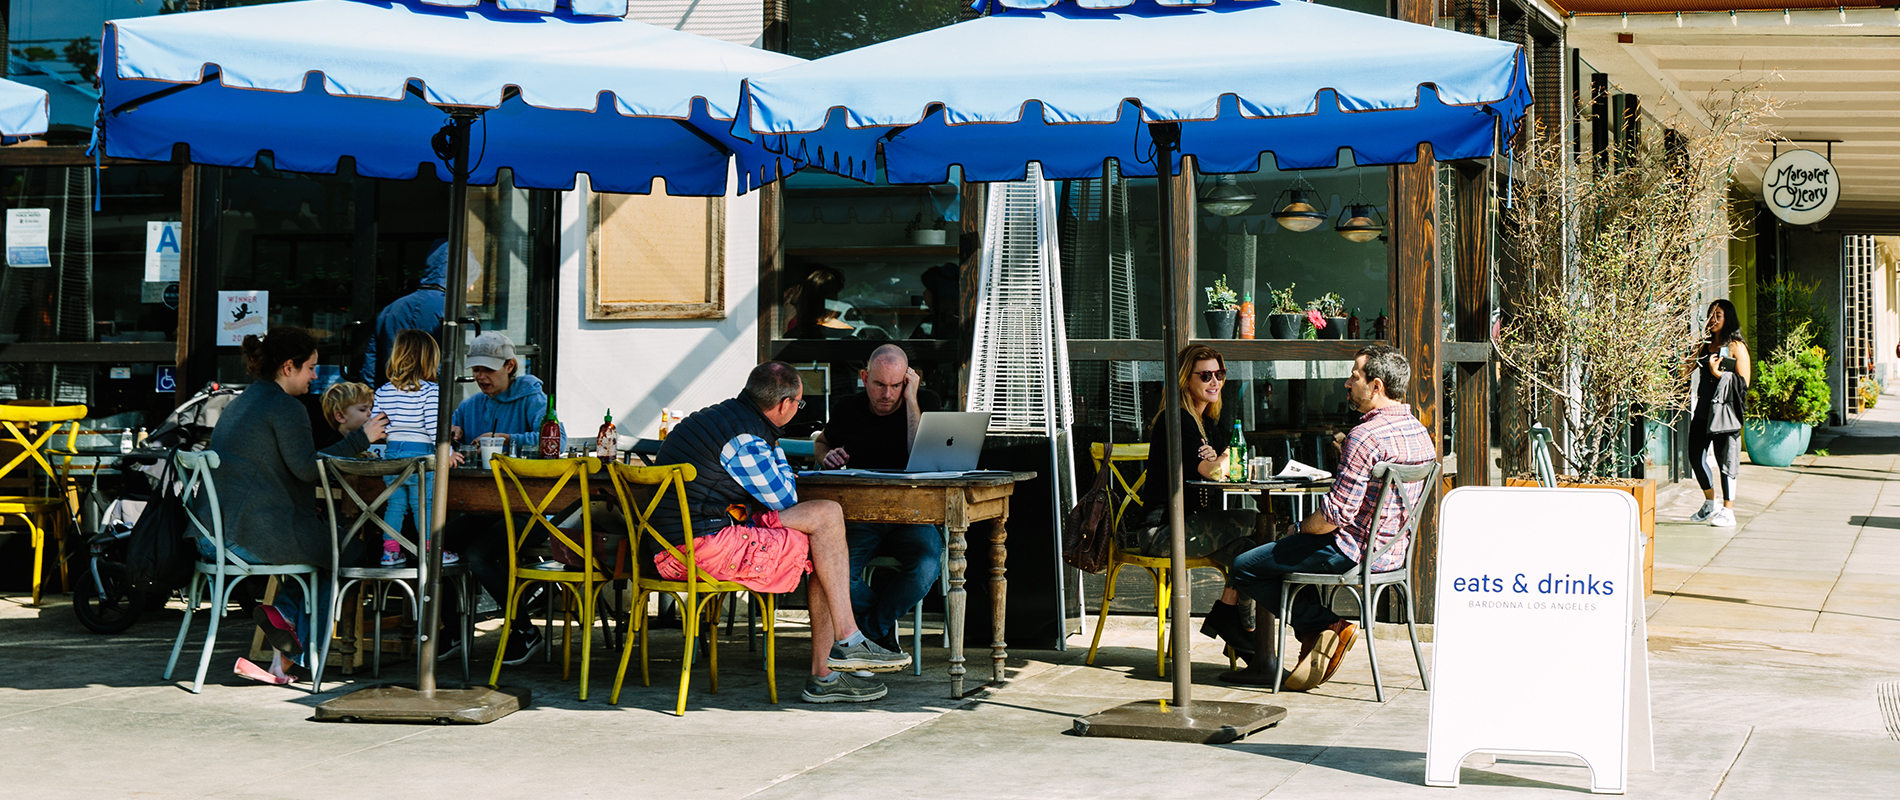 People enjoying outdoor dining on sunny day at Bardonna in Santa Monica